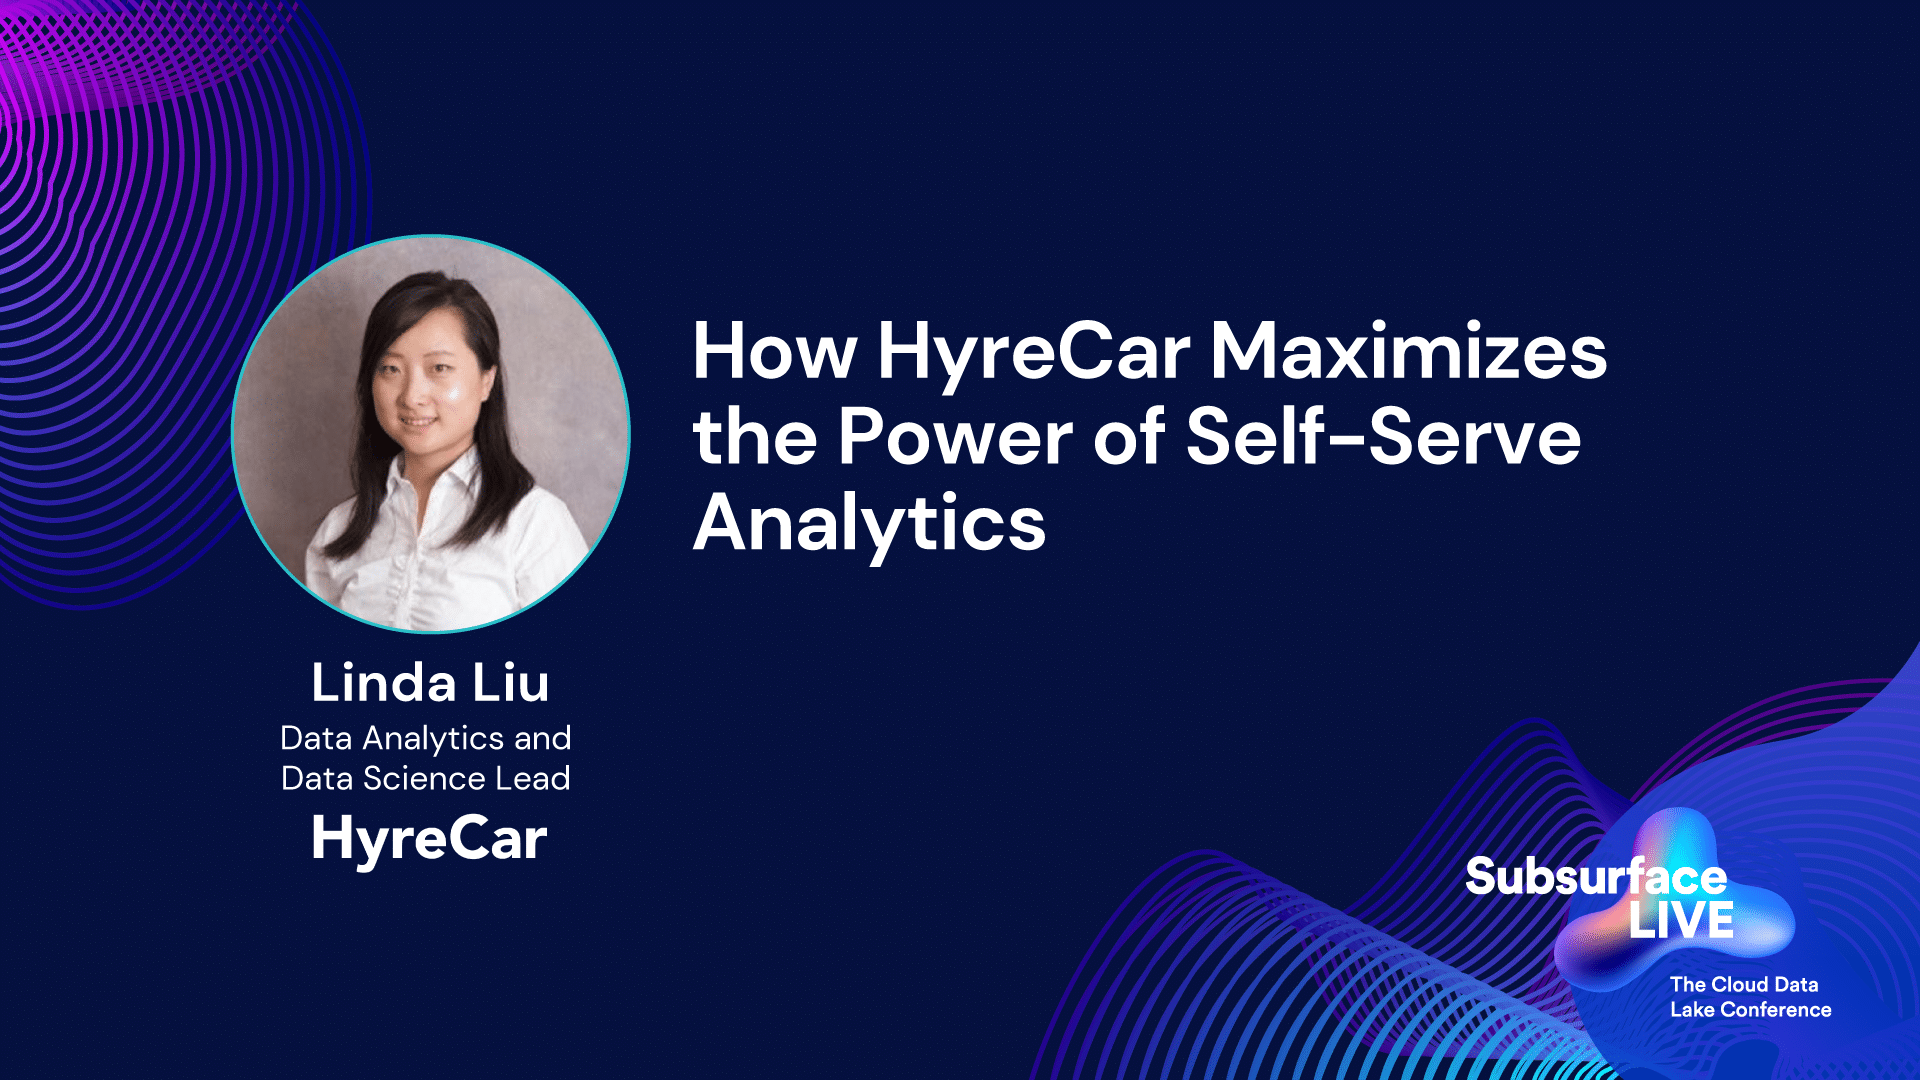 How HyreCar Maximizes the Power of Self-Serve Analytics